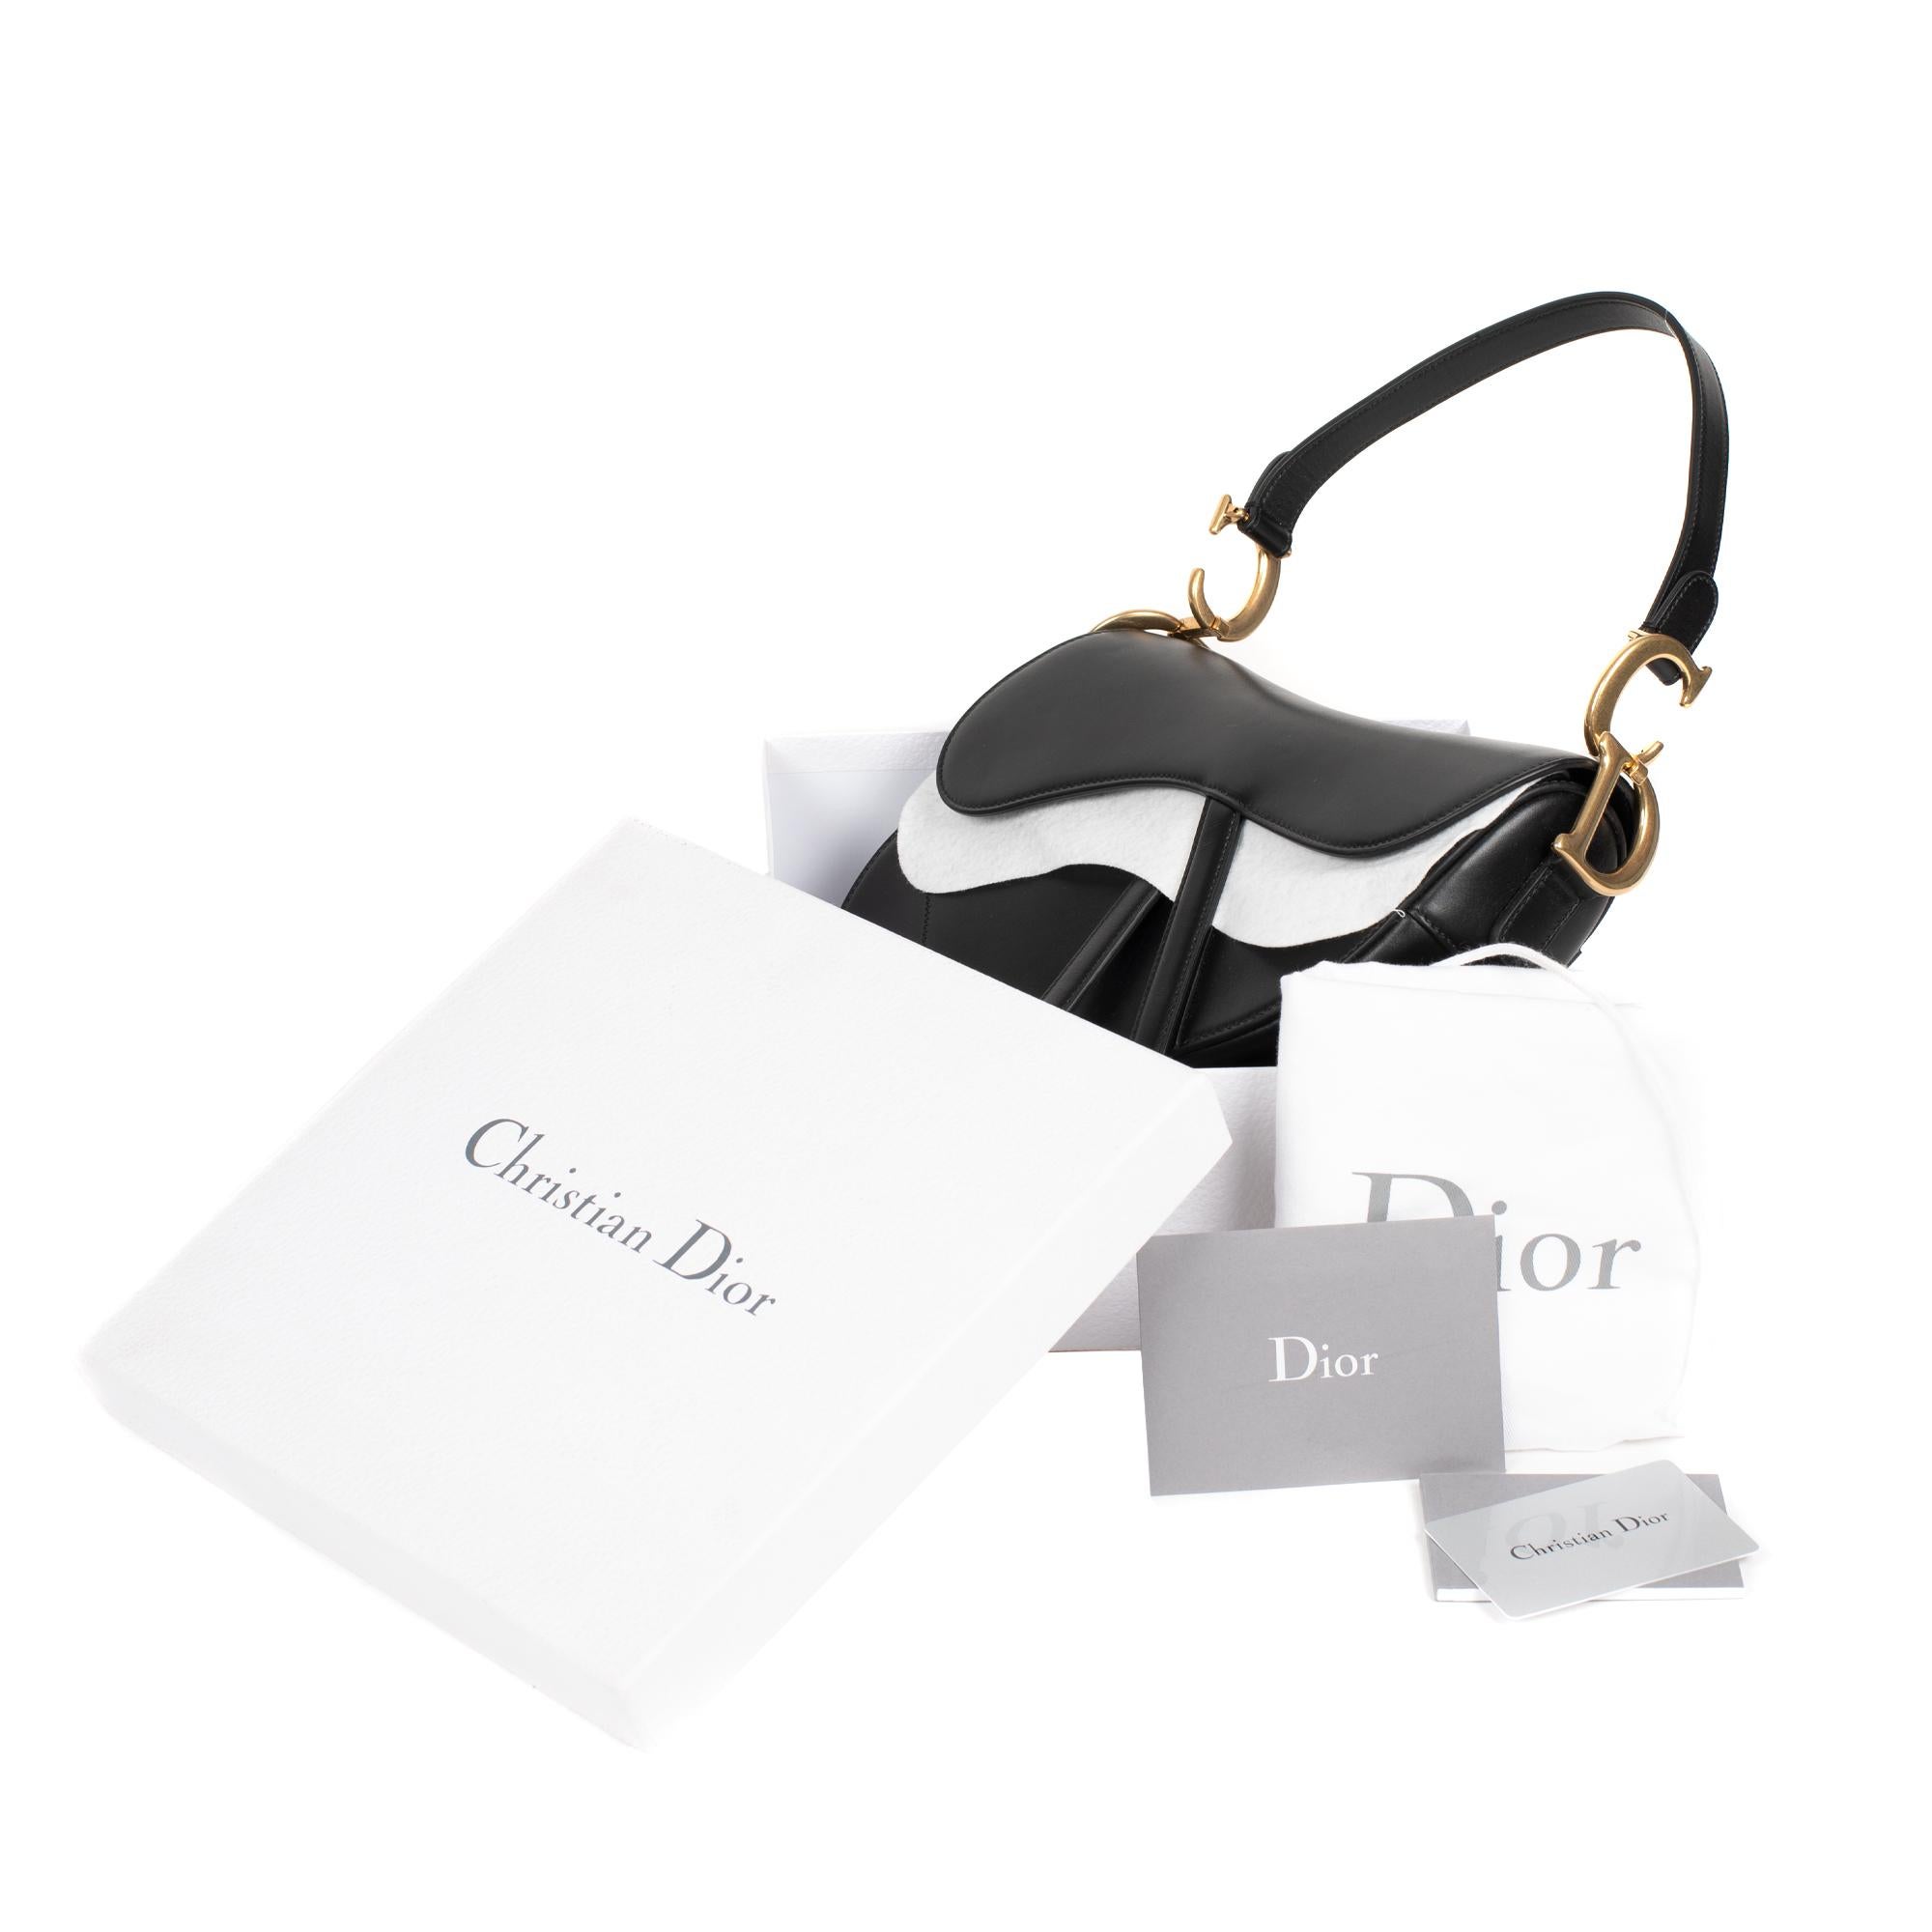 Amazing NEW Christian Dior Saddle bag in box black calfskin, golden hardware 4